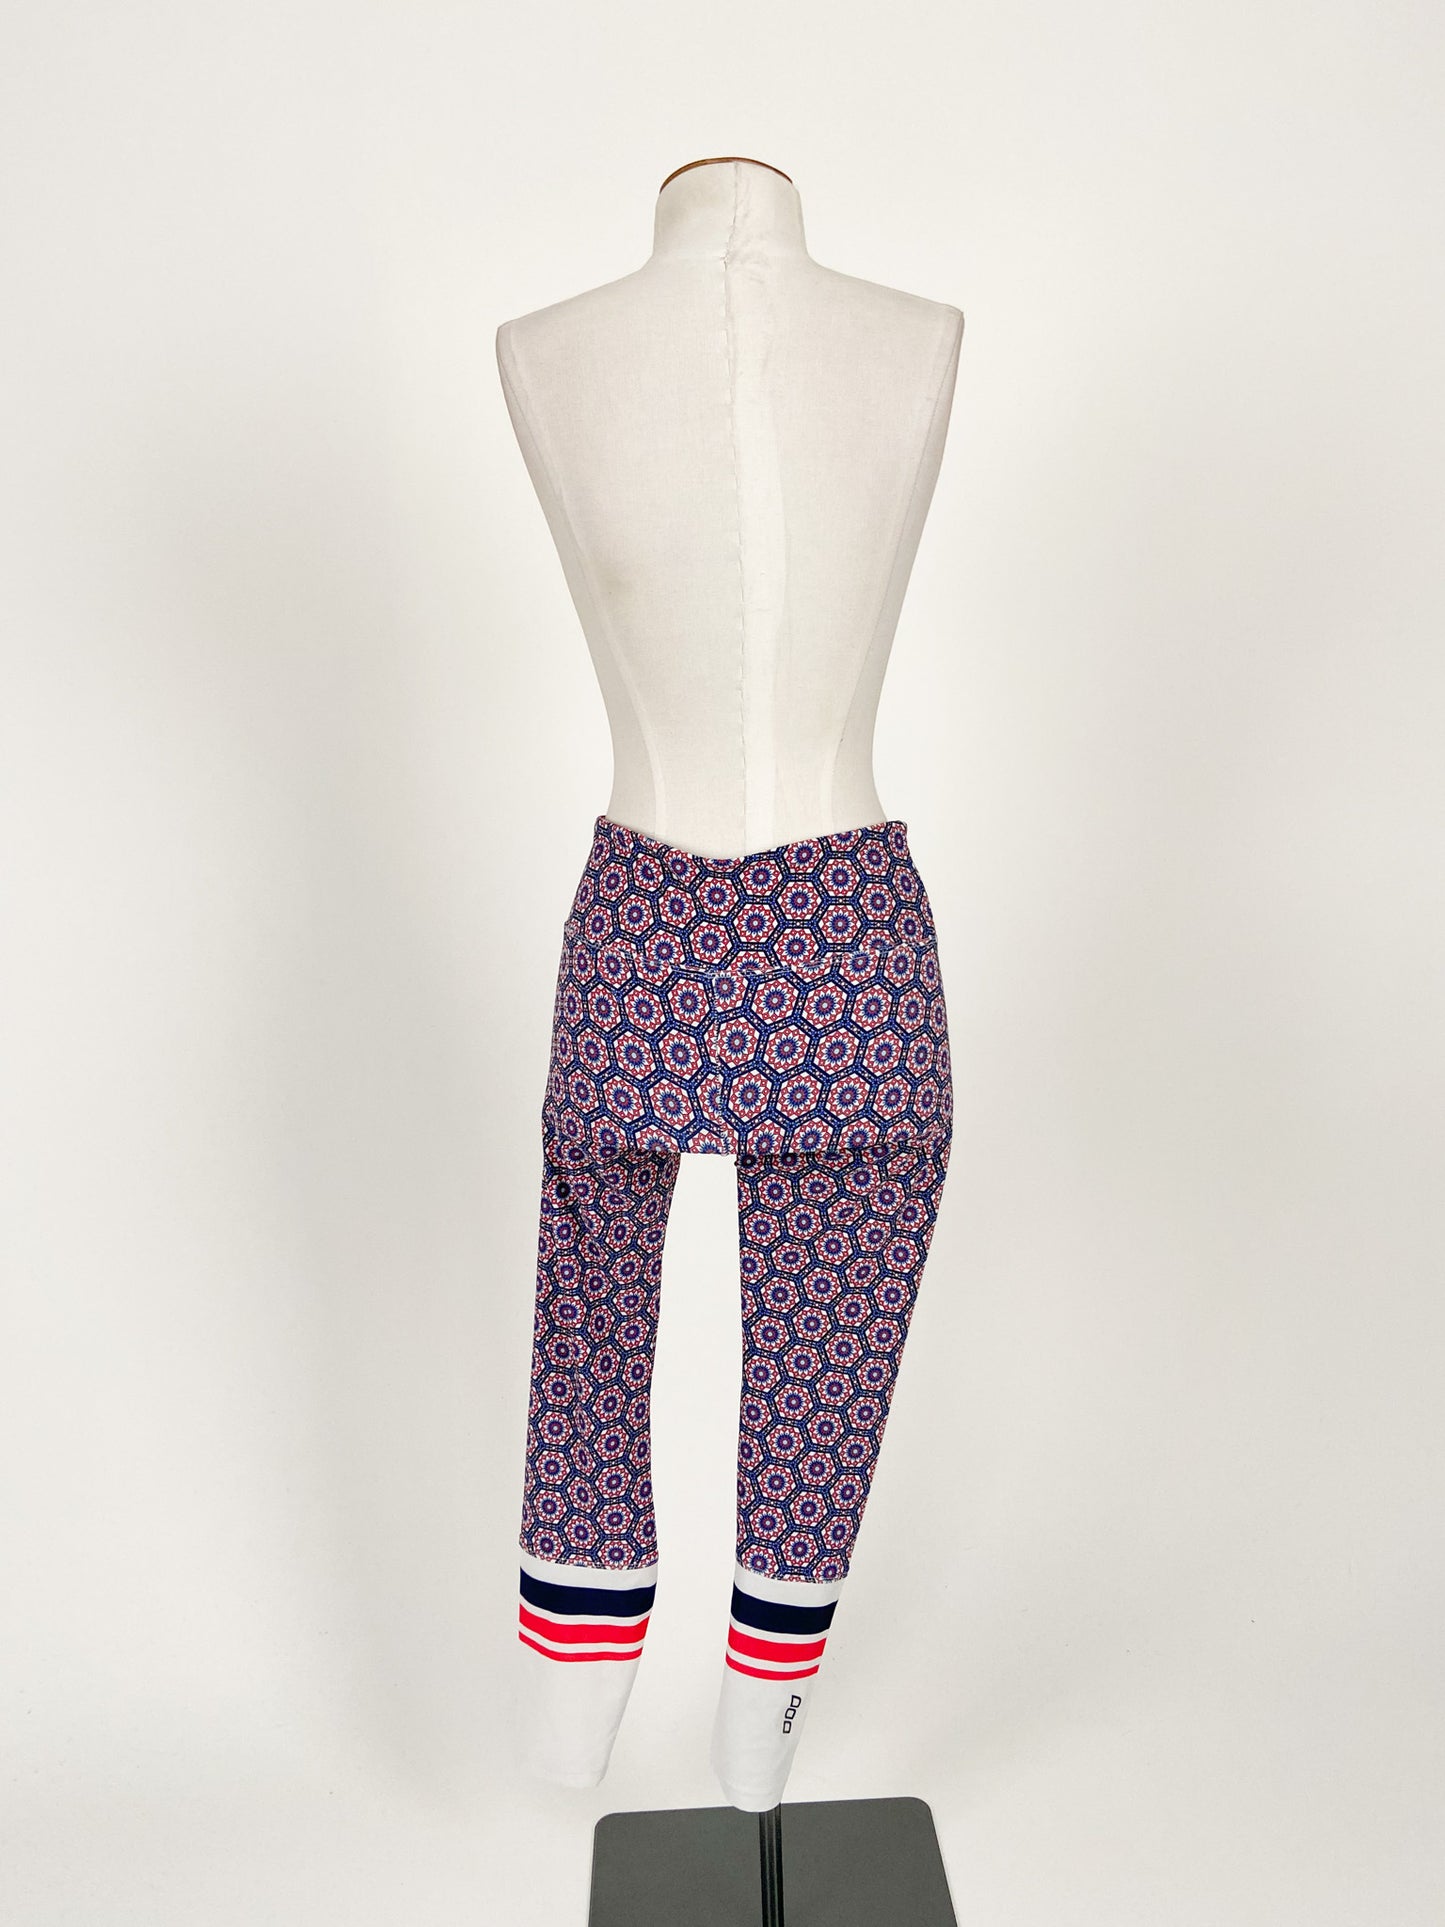 Lorna Jane | Multicoloured Casual Activewear Bottom | Size M